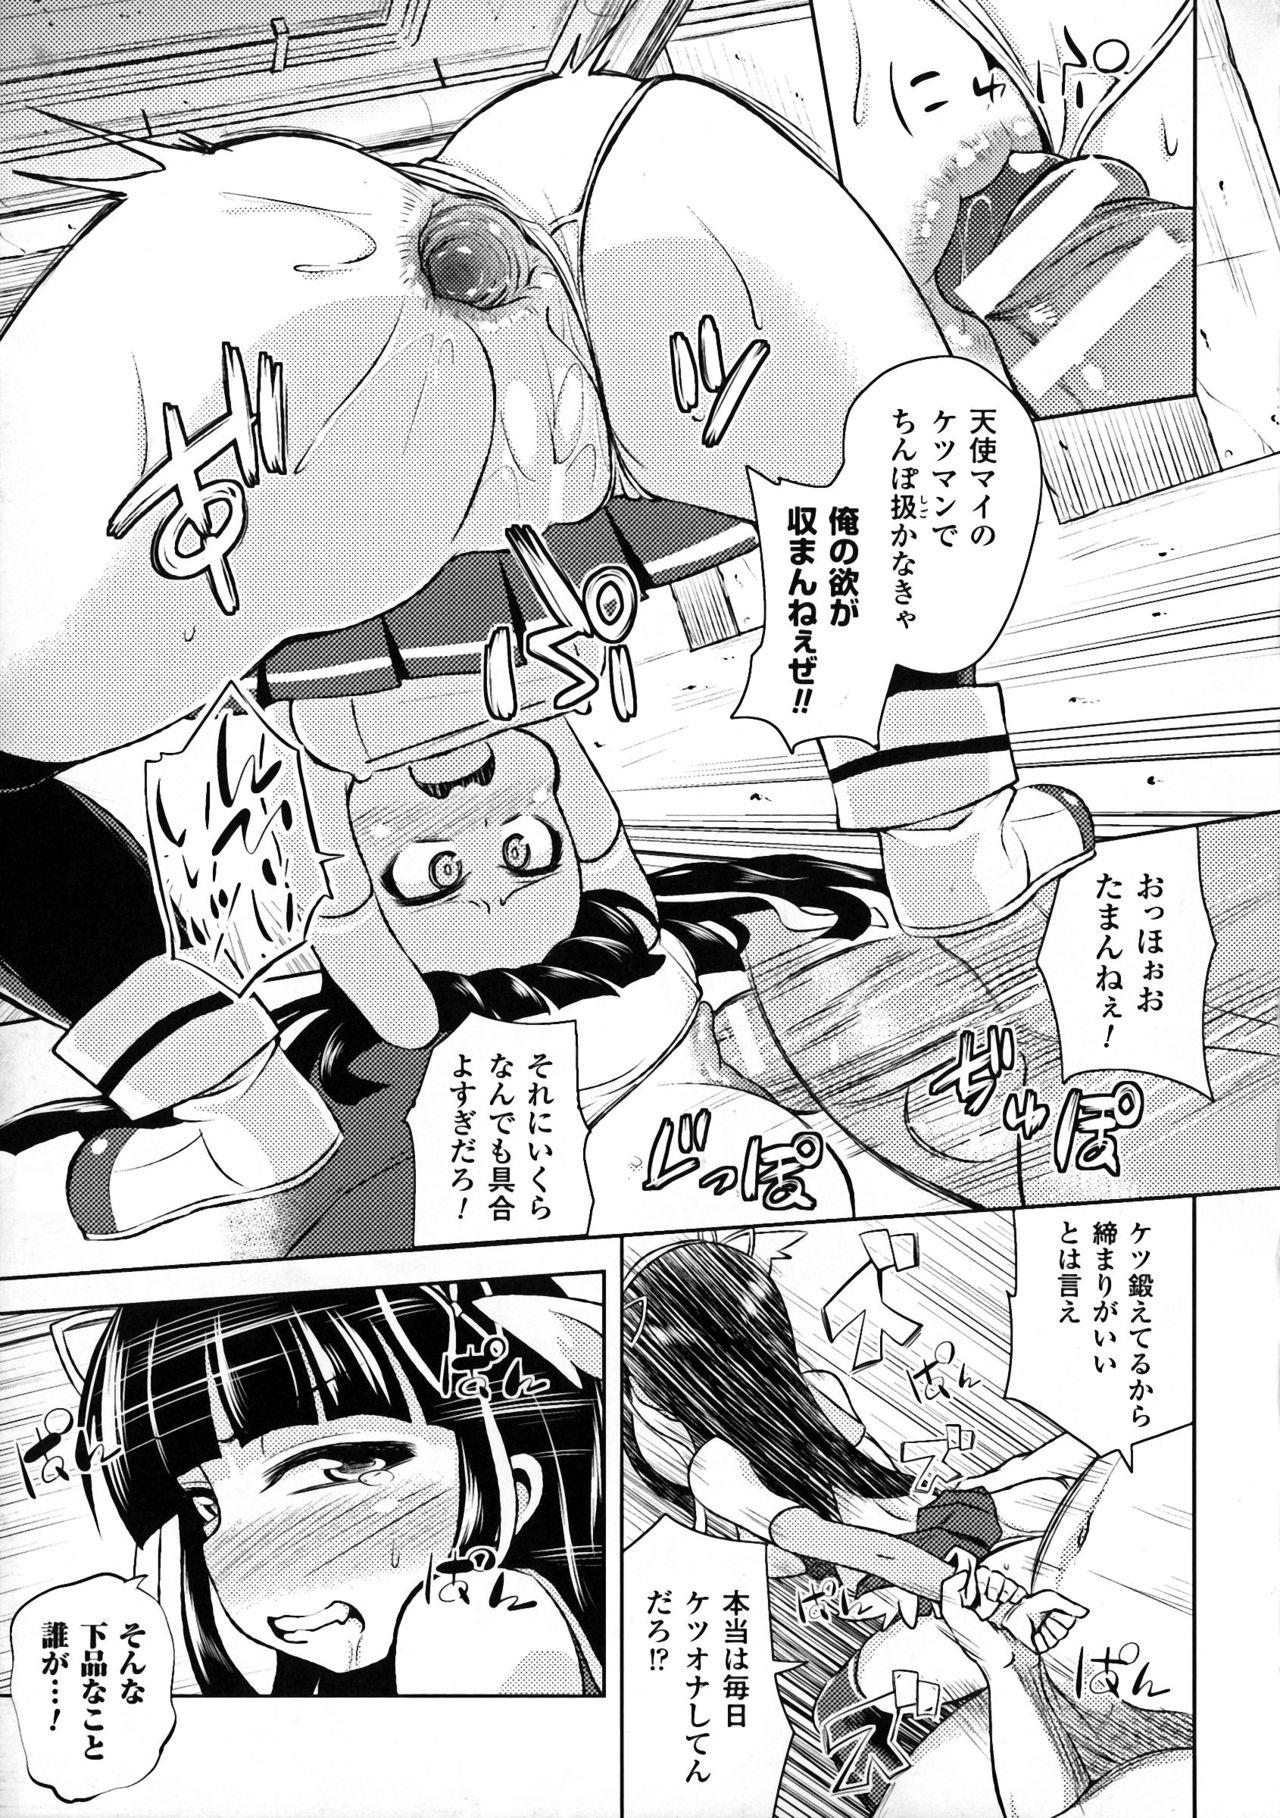 Seigi no Heroine Kangoku File DX Vol. 7 239